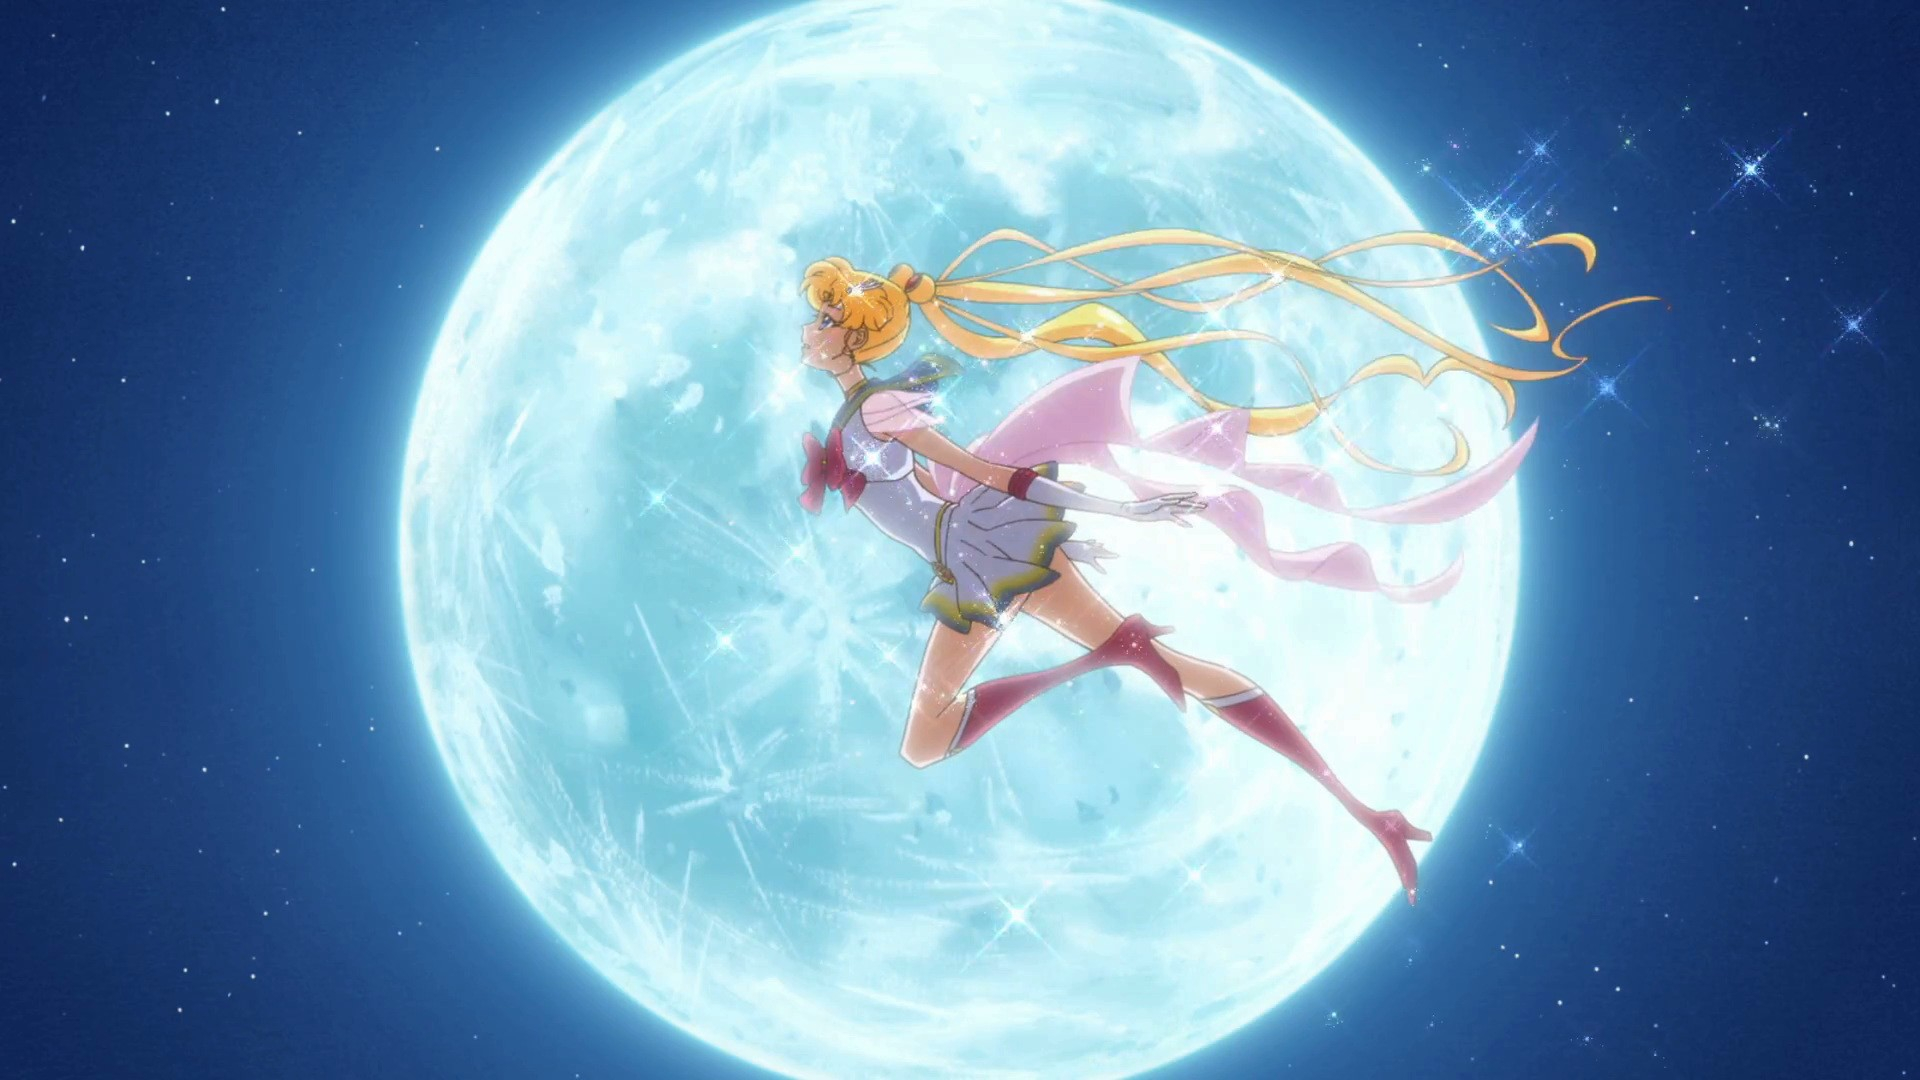 1920x1080 Sailor Moon Sailor Moon Crystal Wallpaper (41083422) Fanpop